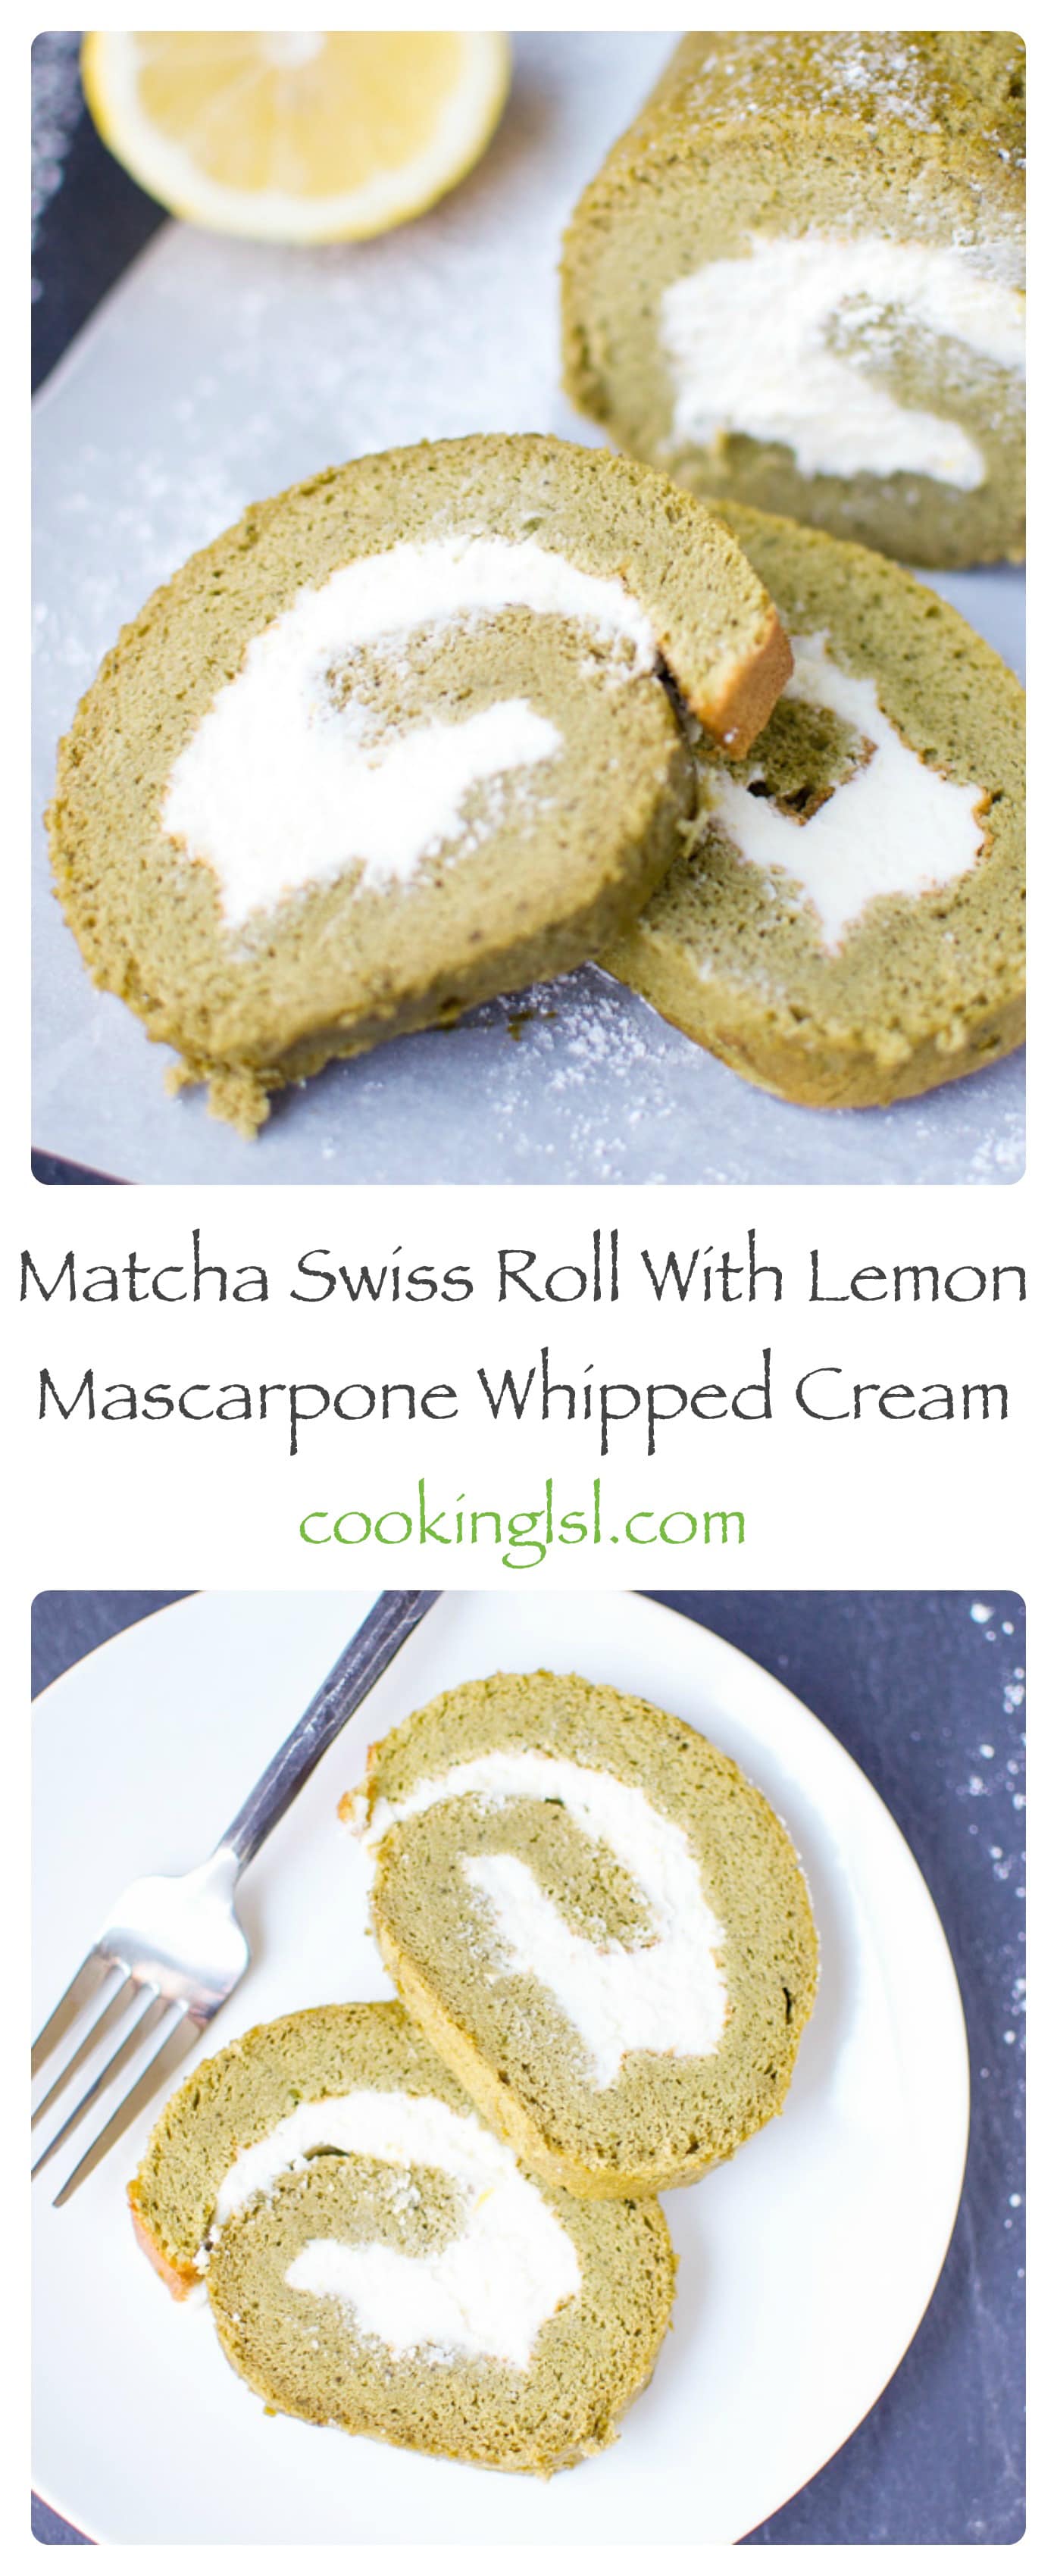 Matcha-Swiss-Roll-With-Whipped-Mascarpone-Cream